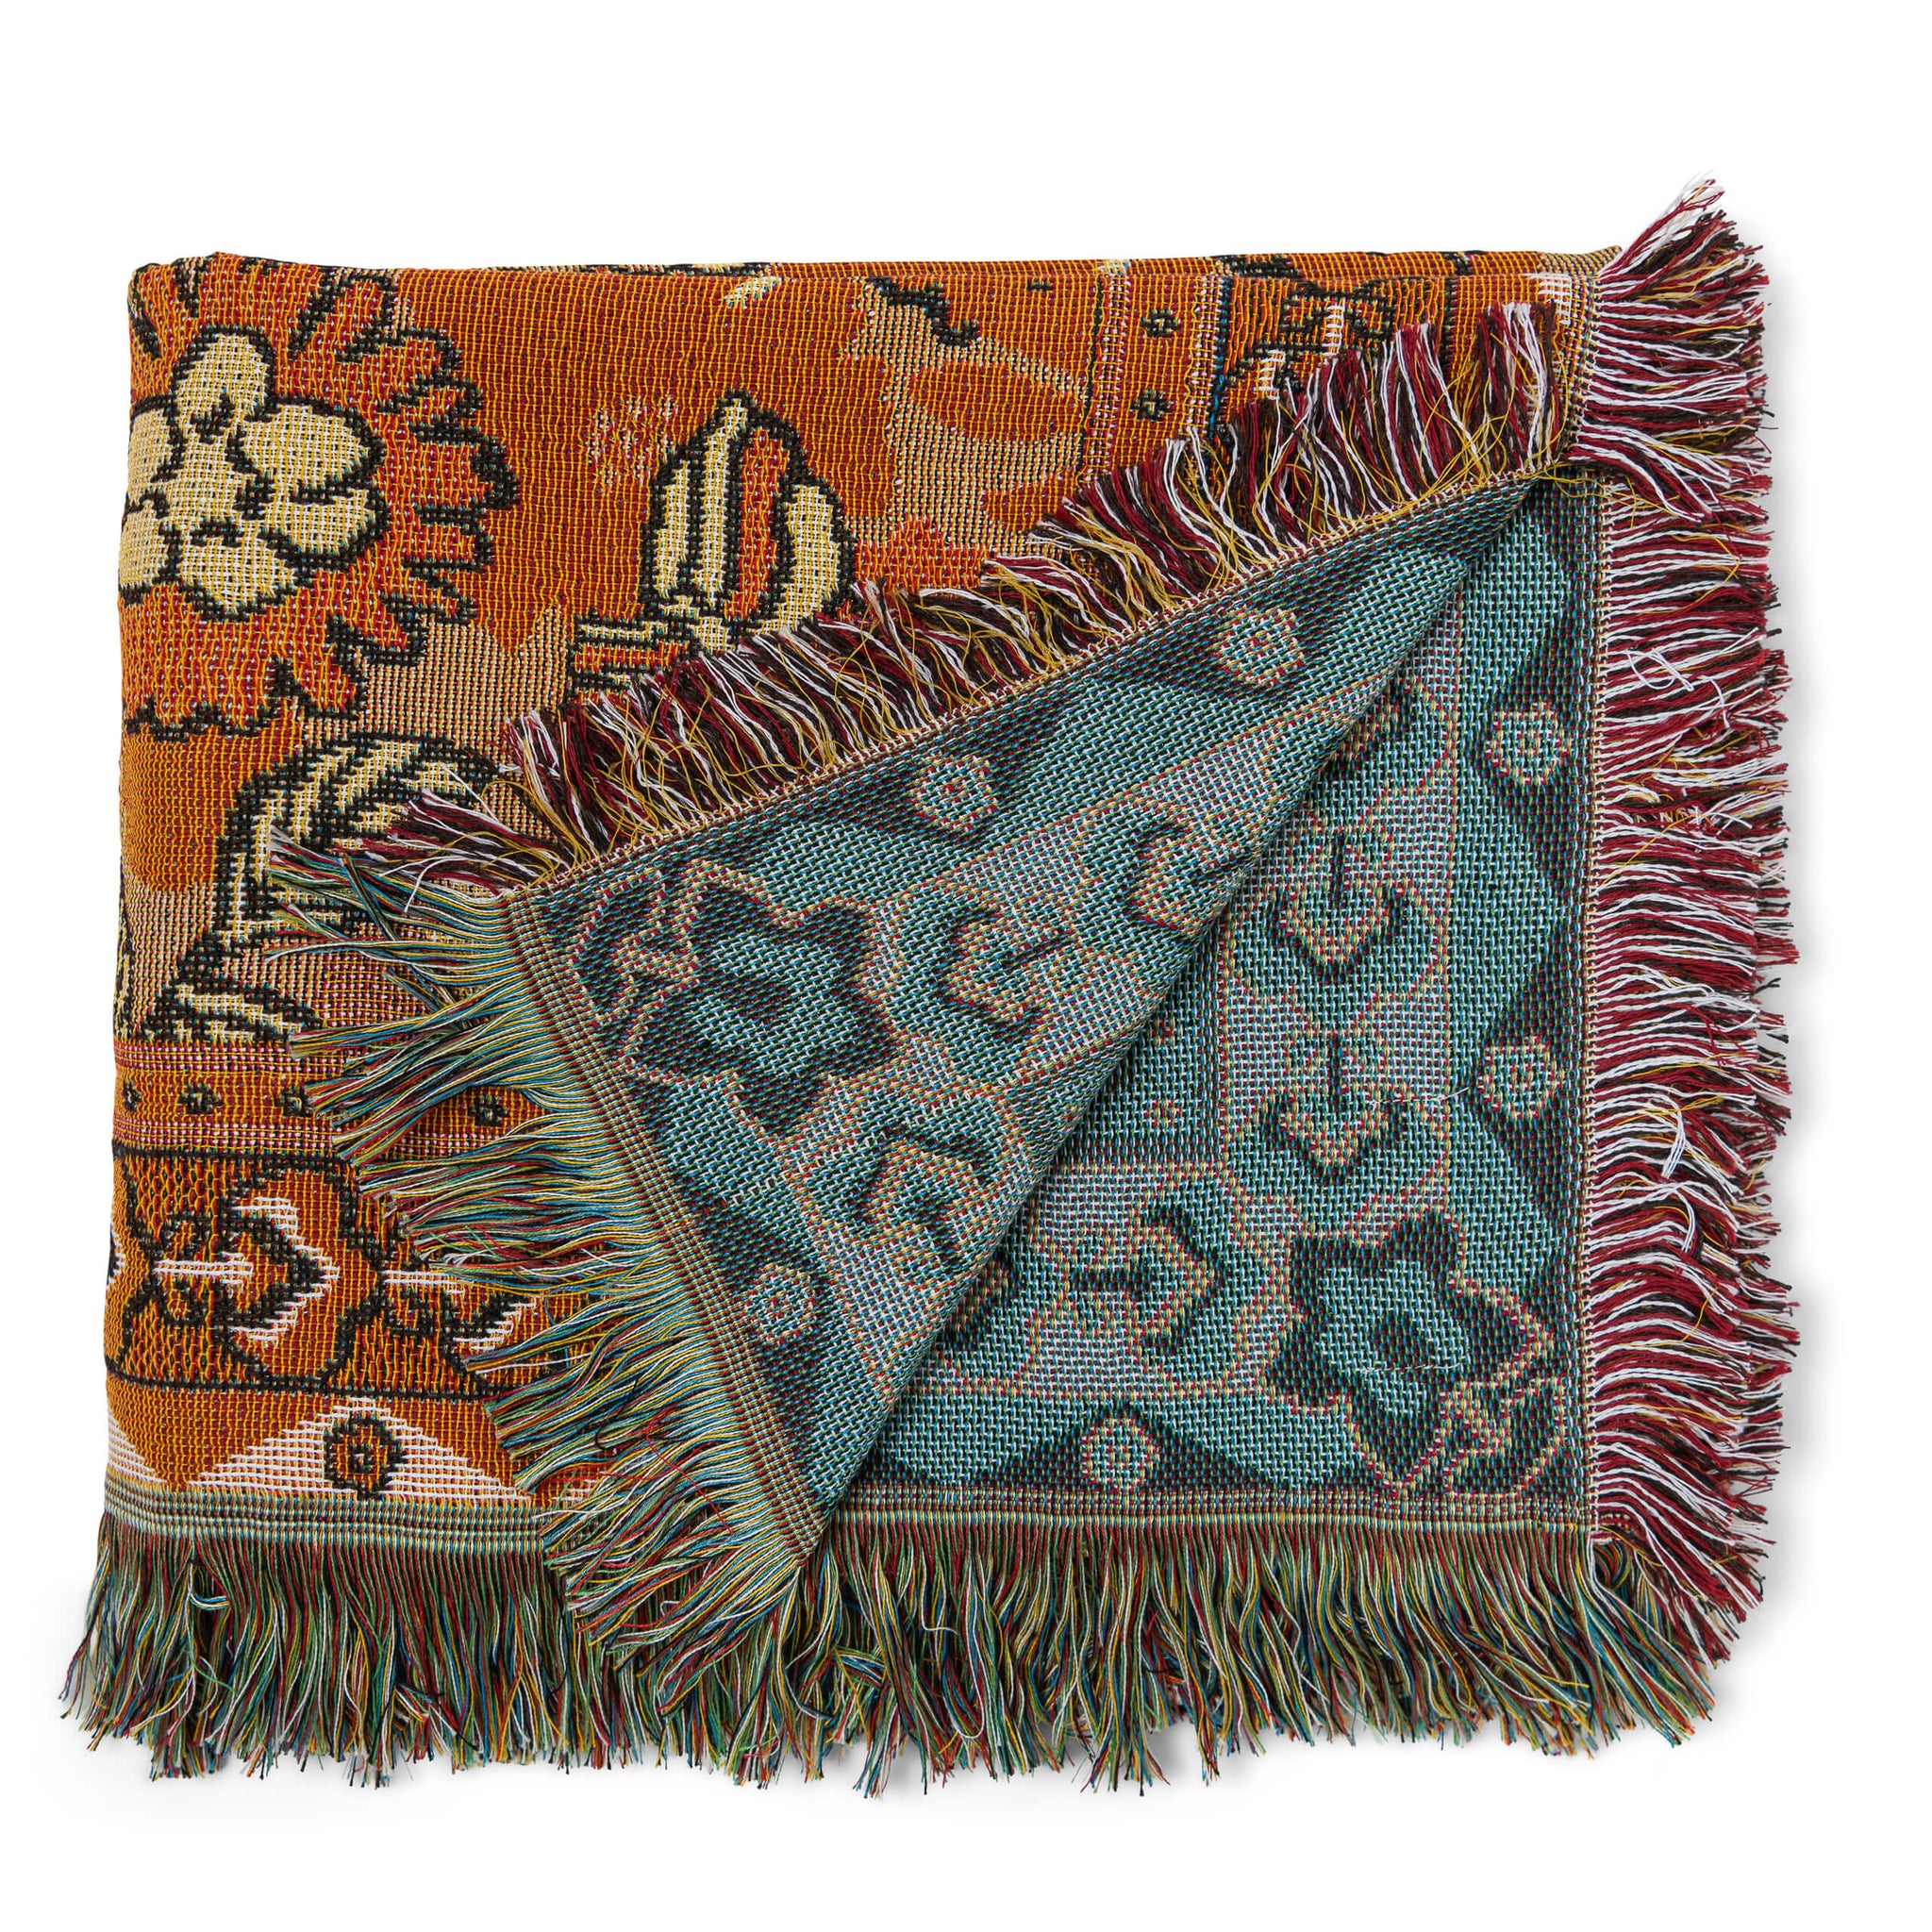 Penny Lane' Woven Cotton Throw Rug Picnic Blanket – Hendeer